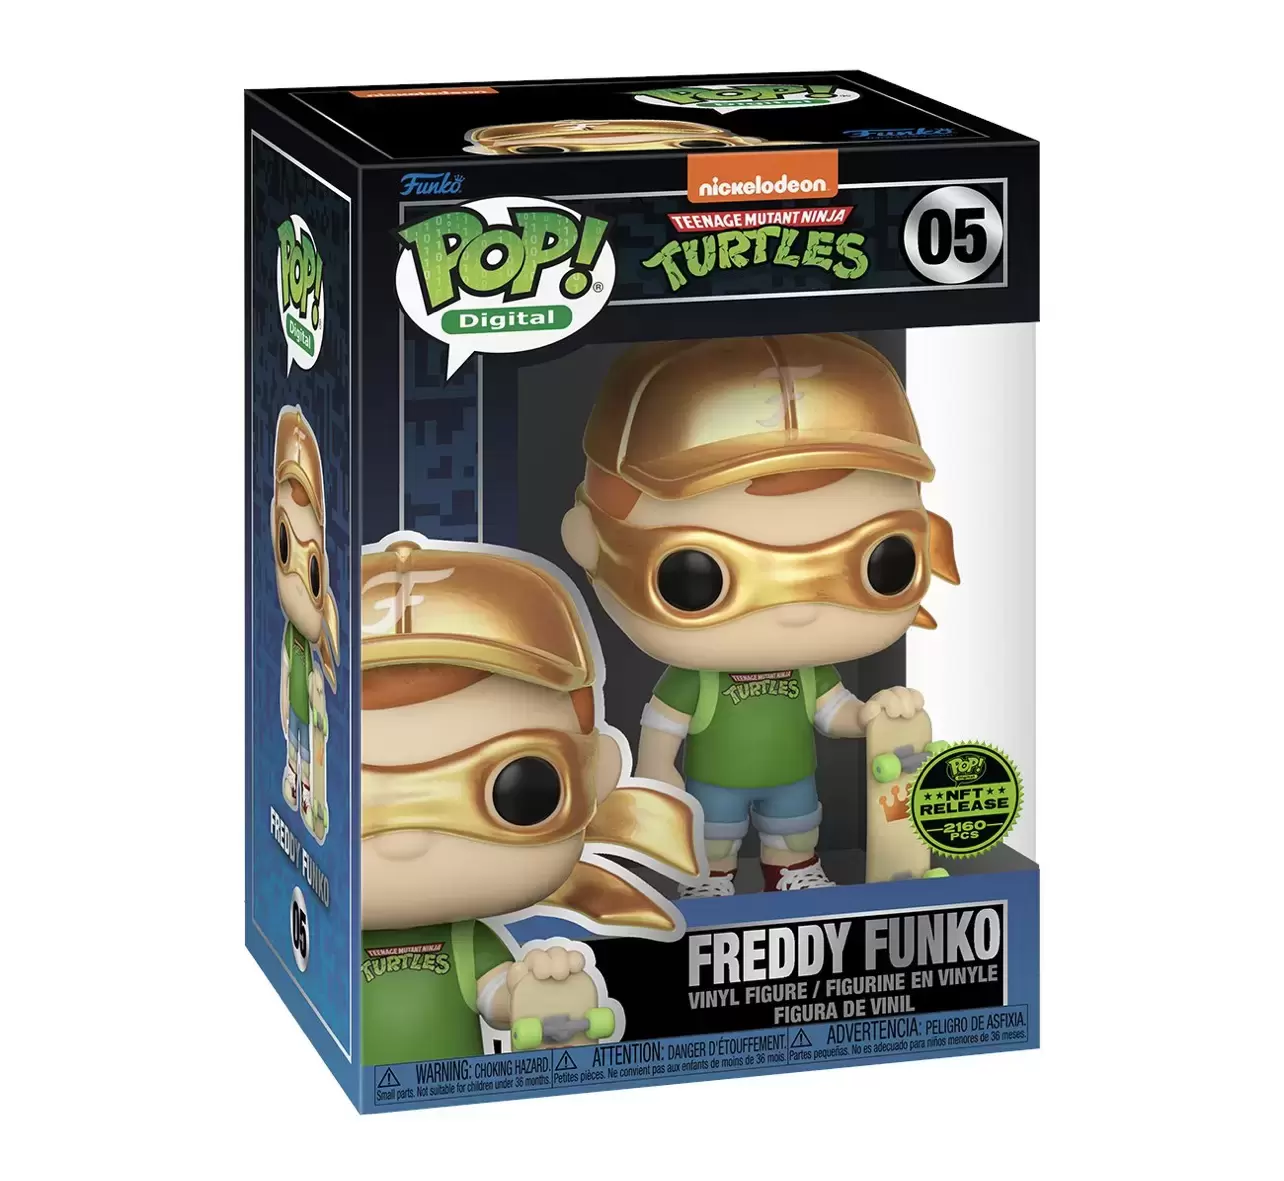 POP! Digital - Teenage Mutant Ninja Turtles - Freddy Funko